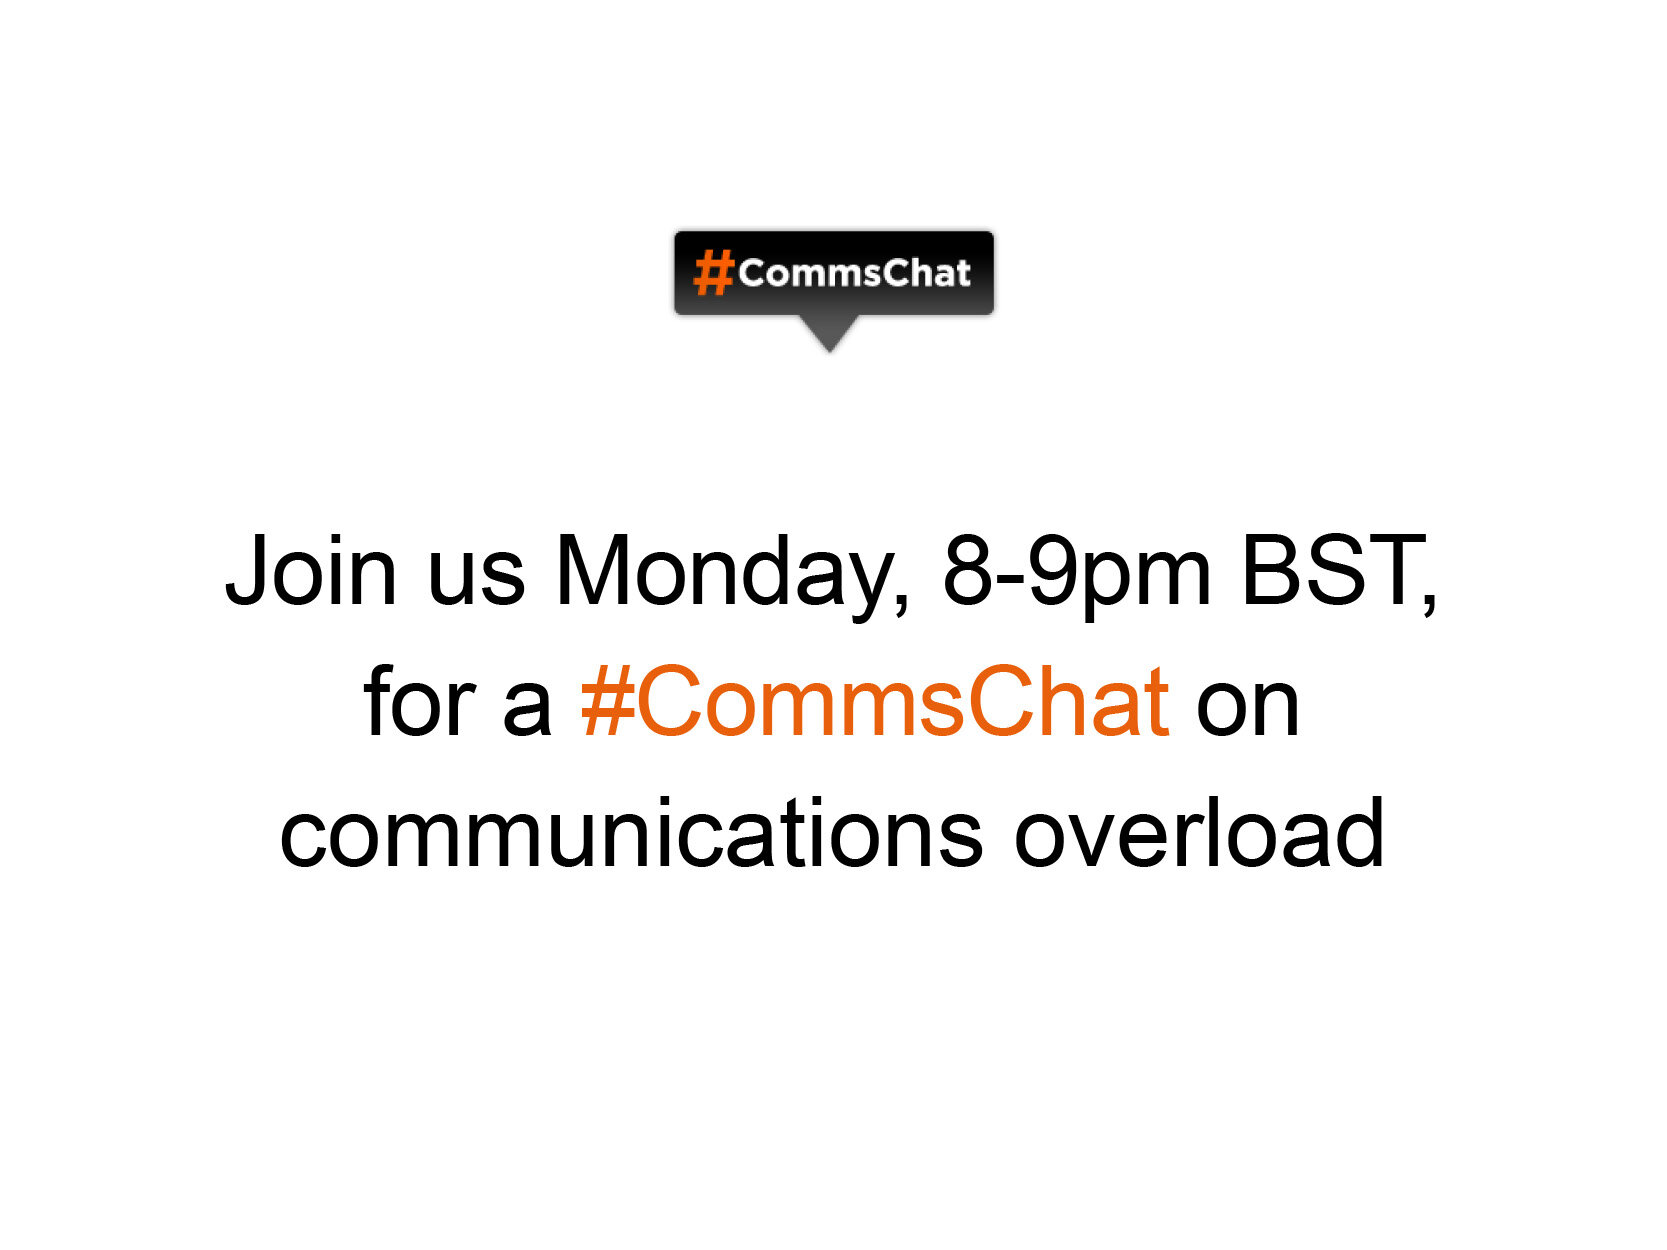 Transcript of #CommsChat on comms overload